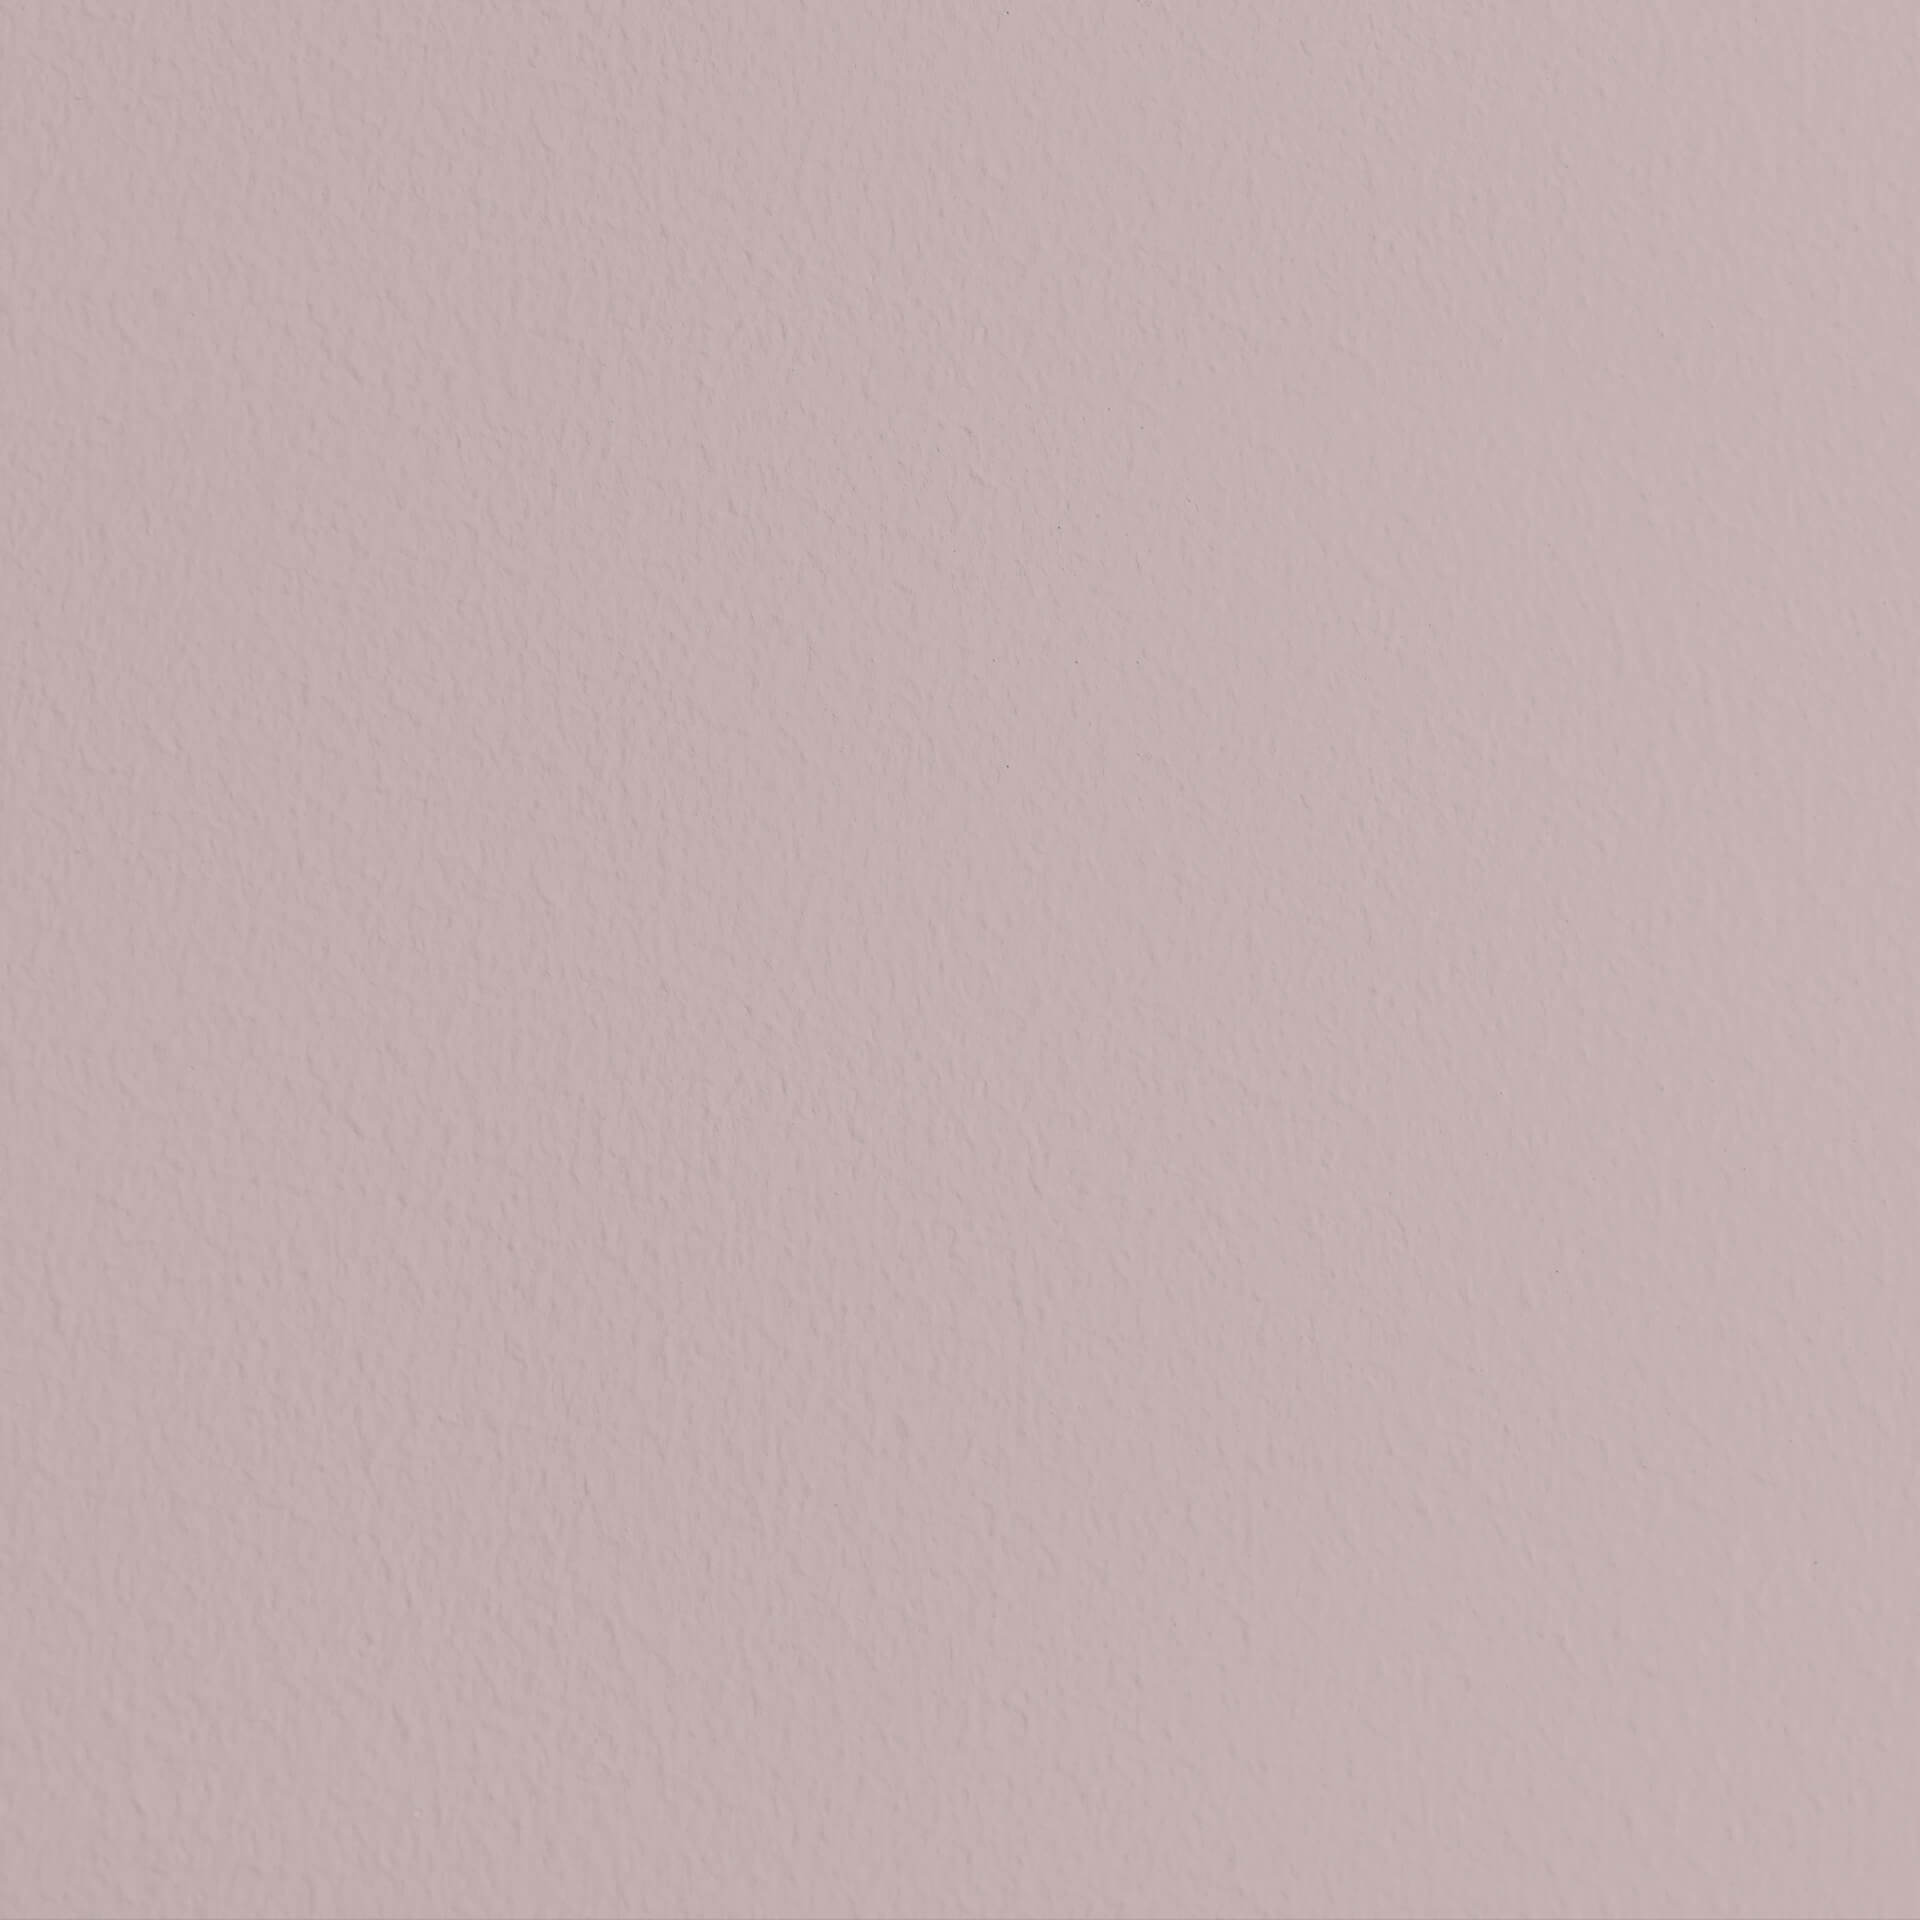 Mylands Pale Lilac No. 246 - Marble Matt Emulsion / Wandfarbe, 2.5L